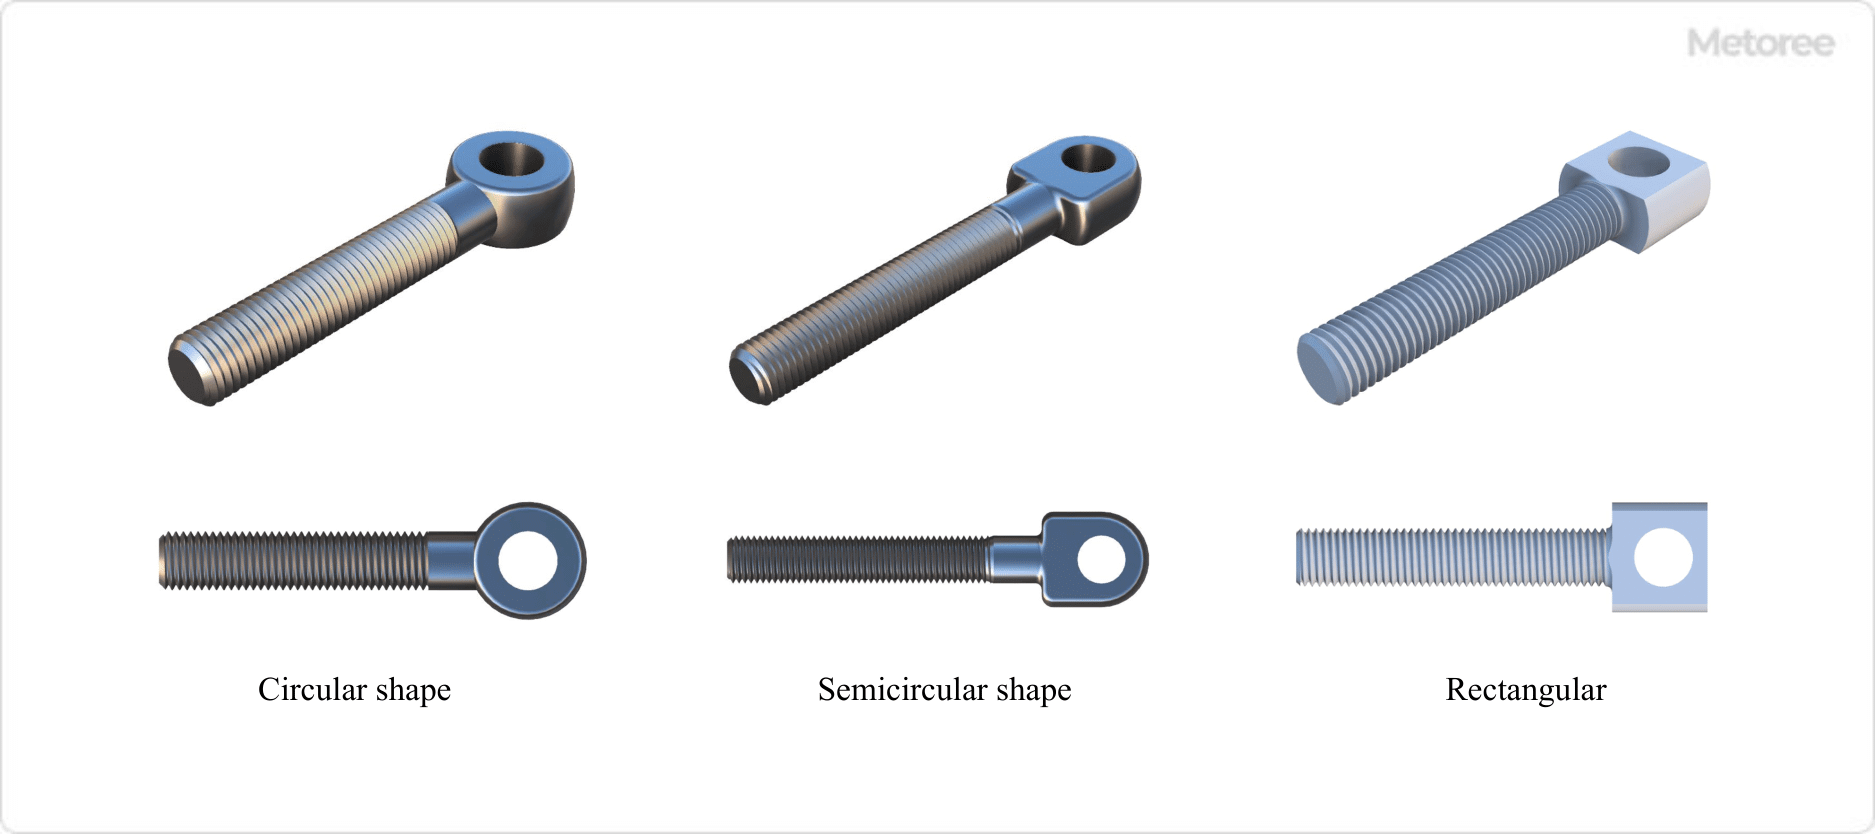 Figure 4. Head shape of hinge bolt